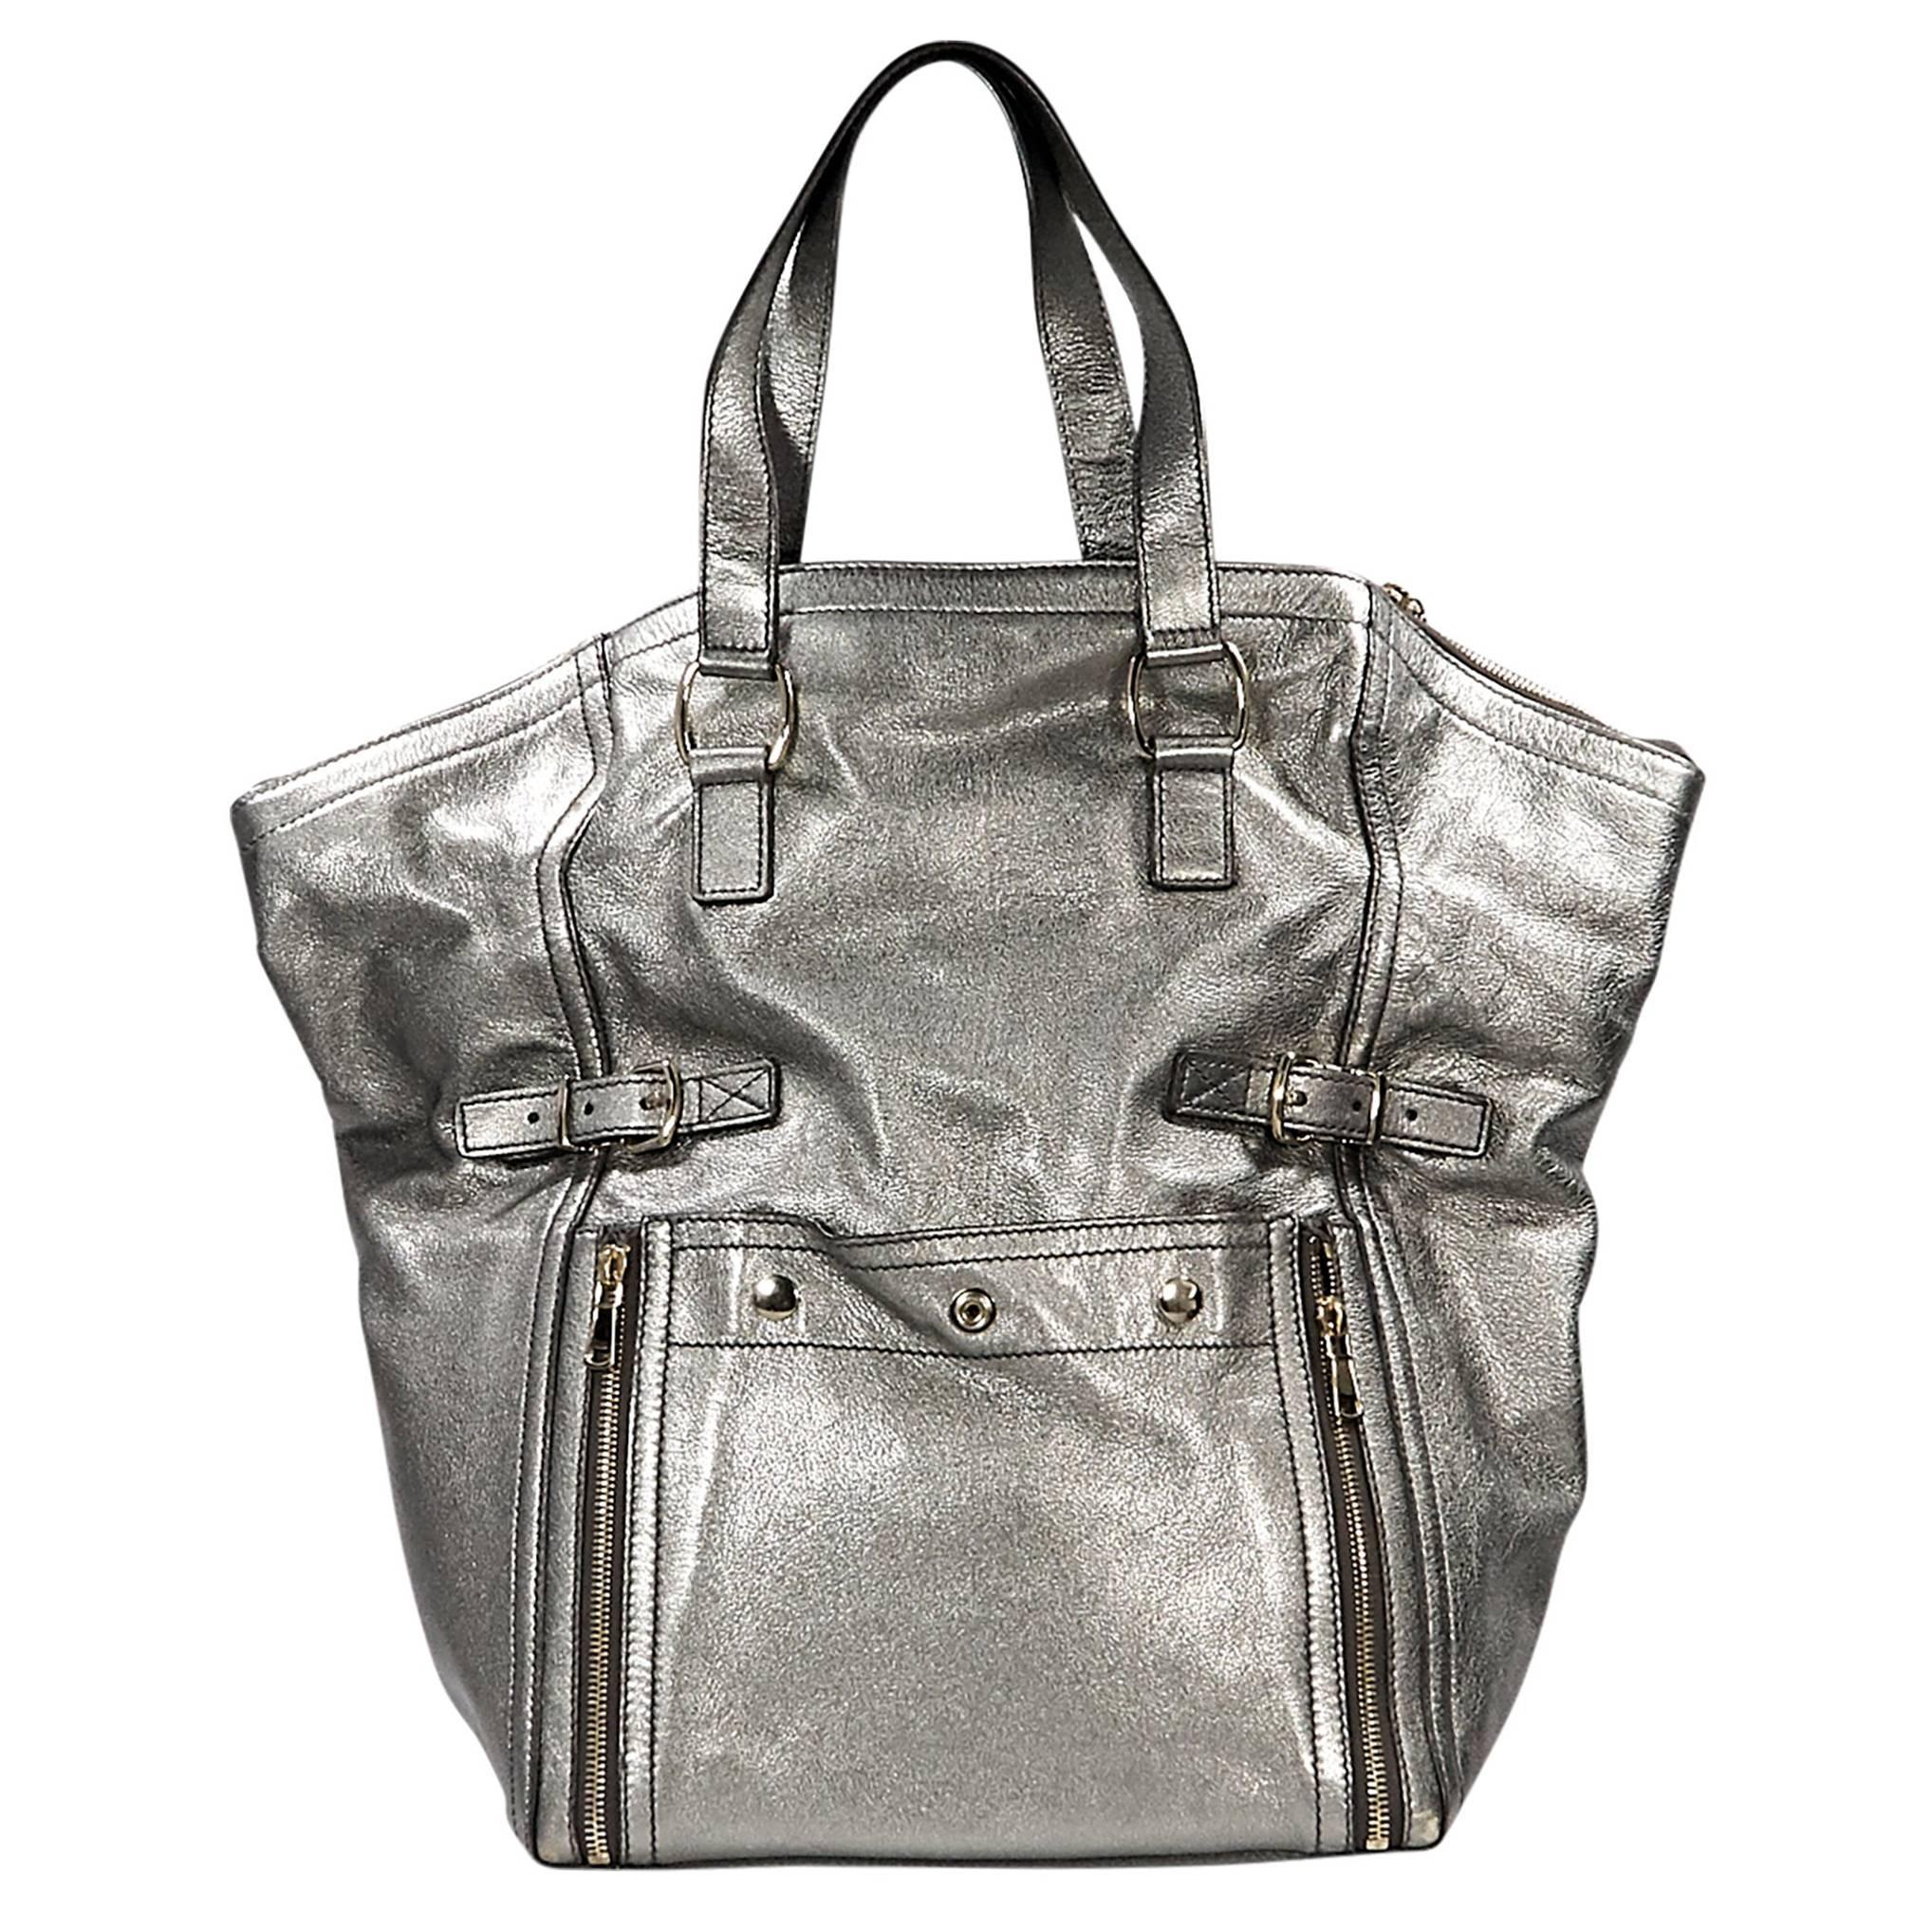 Metallic Silver Yves Saint Laurent Downtown Bag